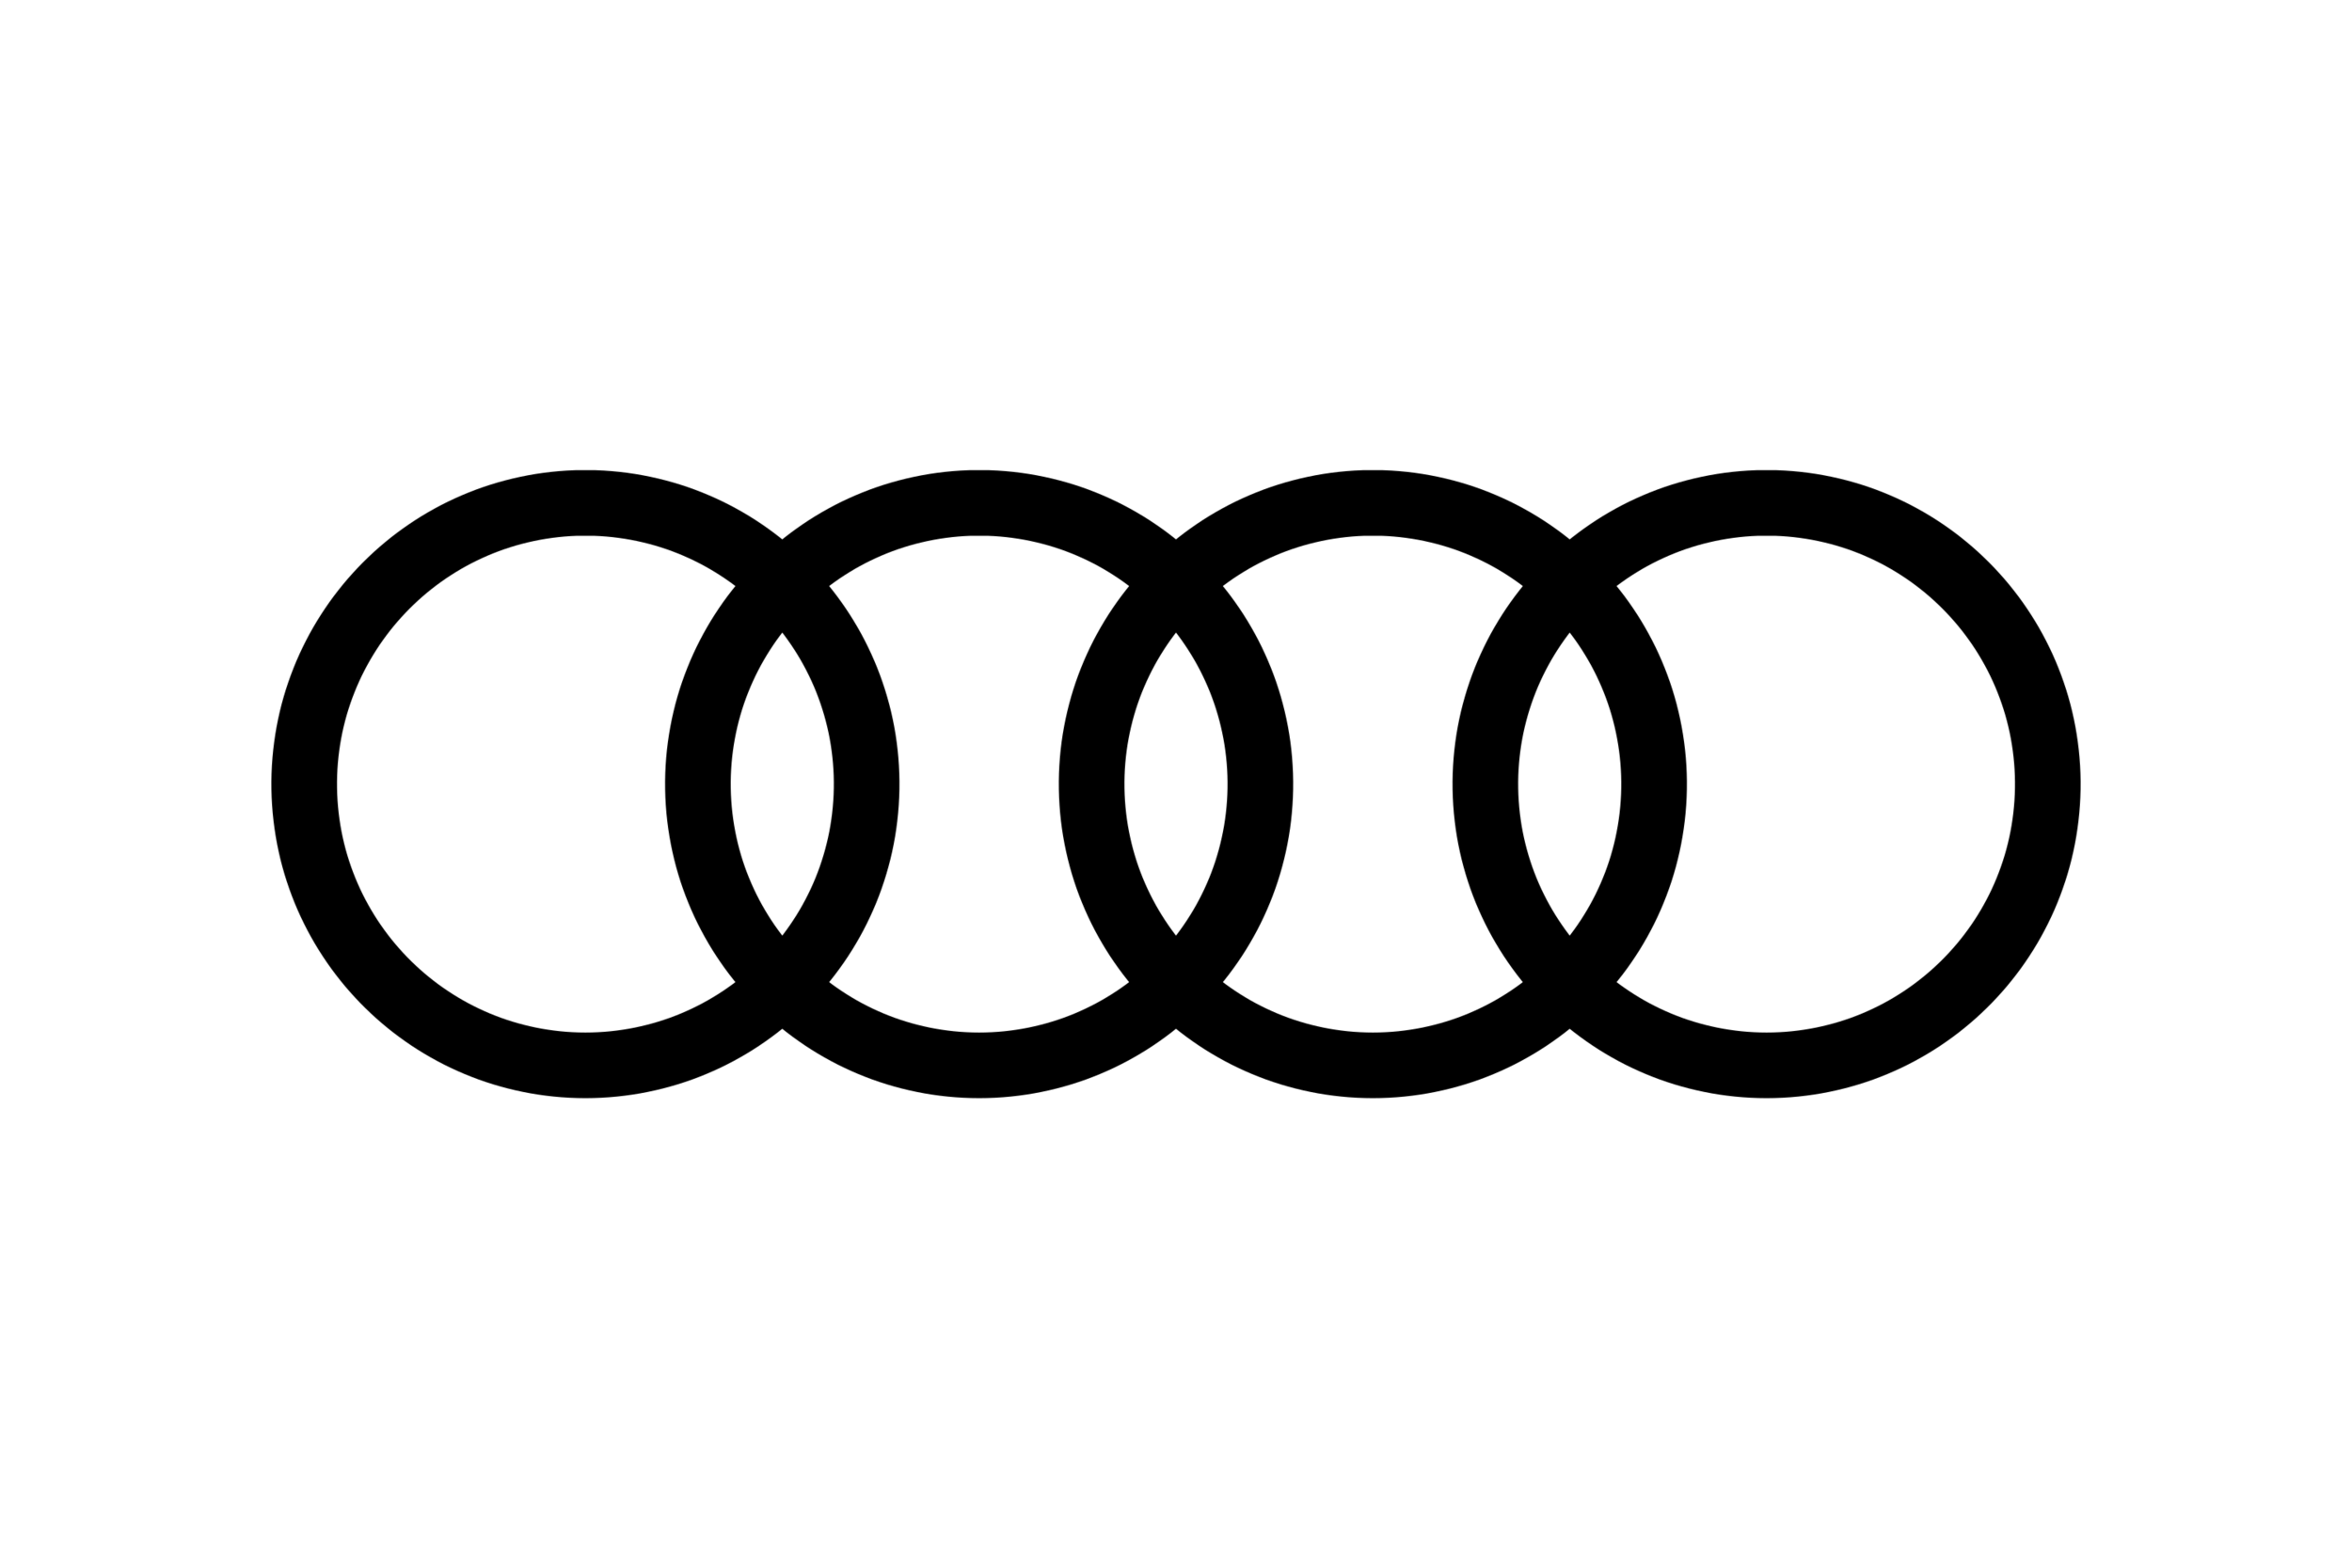 Copy of Audi logo 2.png